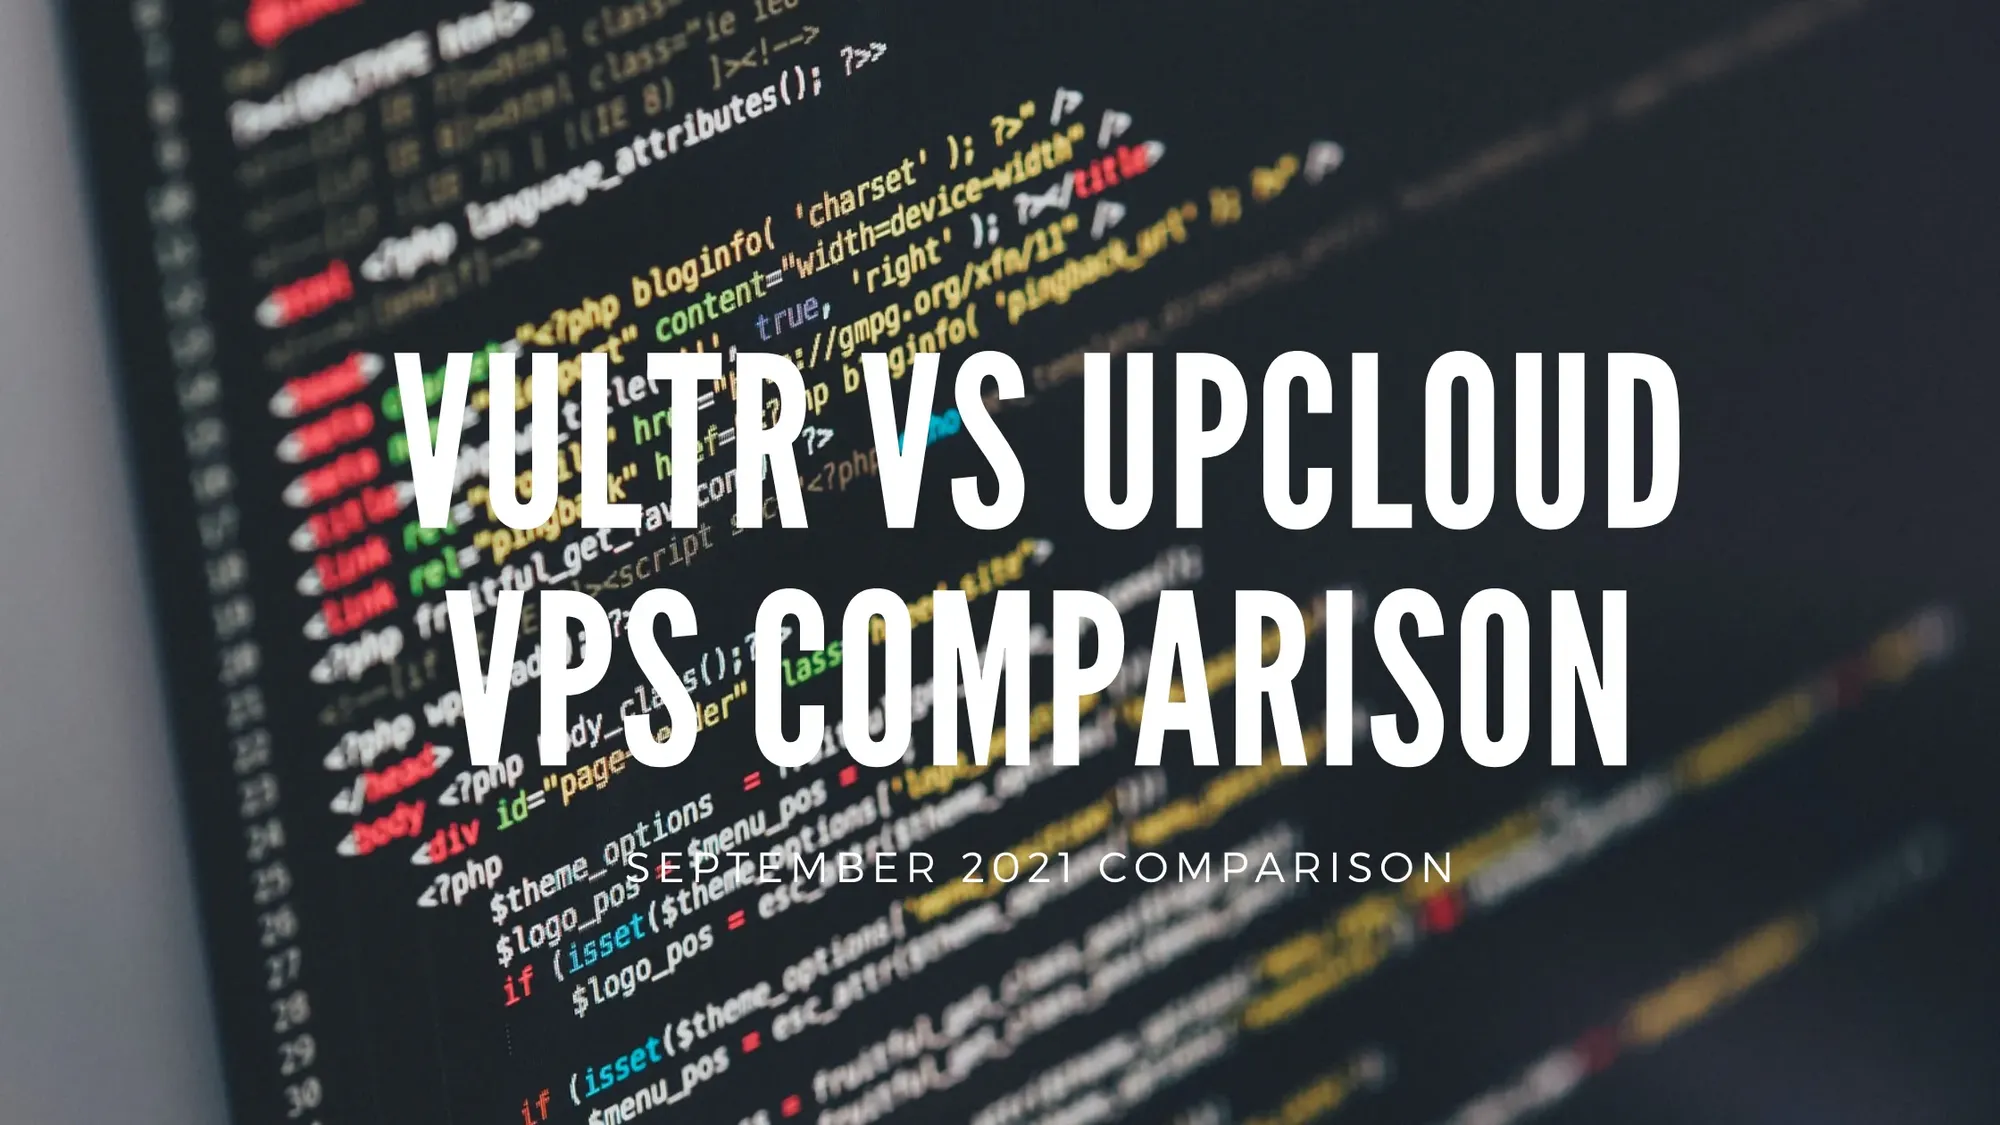 UpCloud vs Vultr High Frequency VPS Comparison September 2021